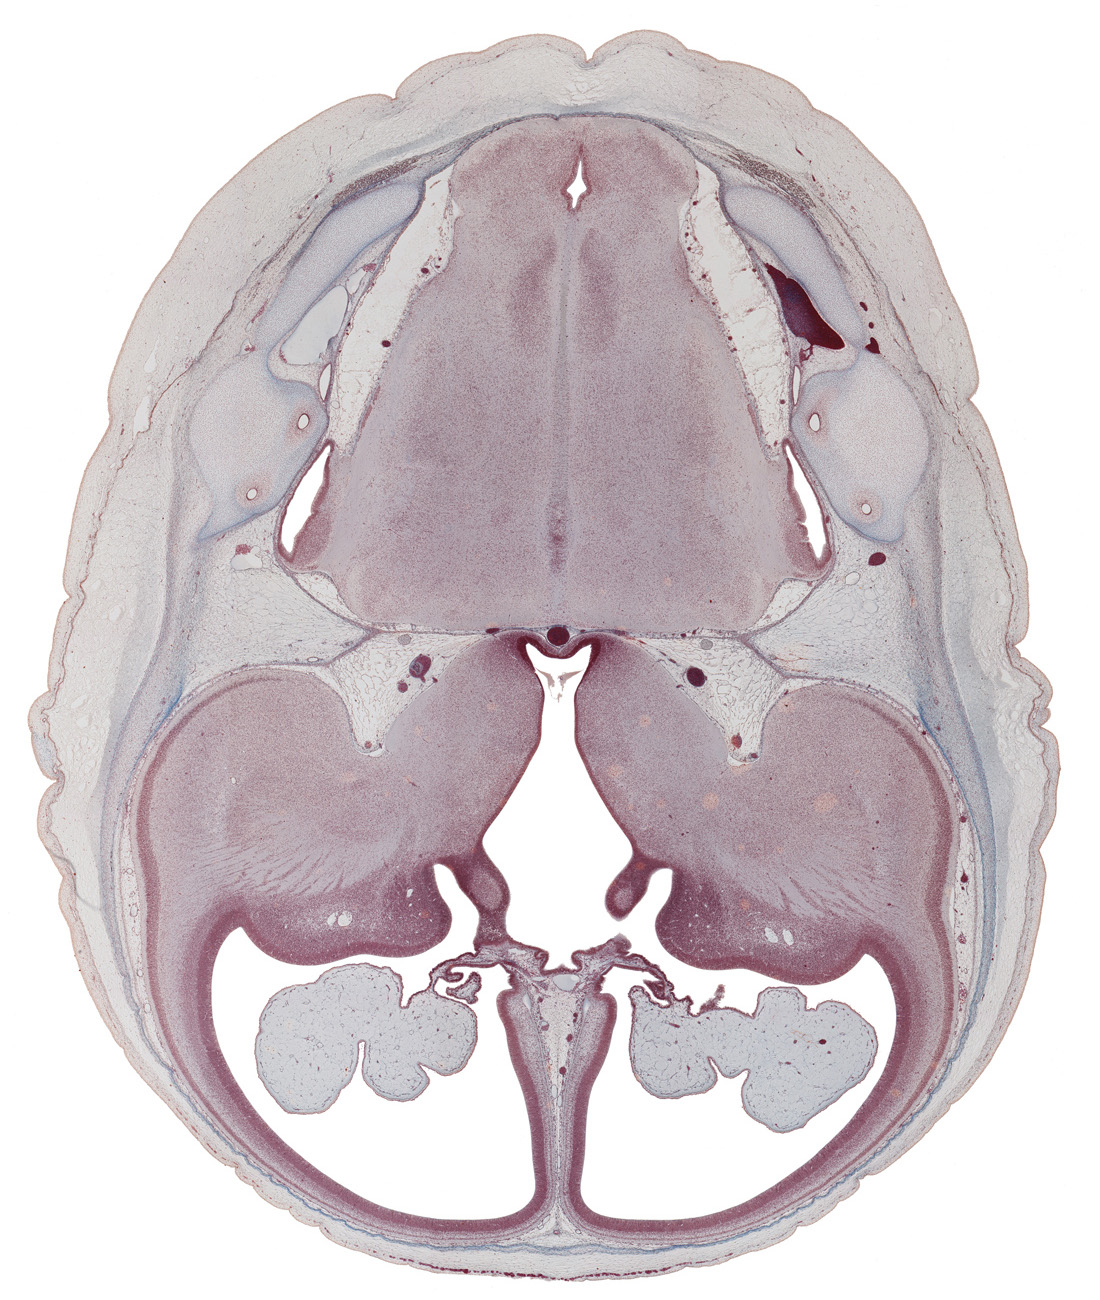 anterior inferior cerebellar artery, anterior semicircular duct, basilar artery, central canal, choroid fissure, edge of interventricular foramen, hypothalamic sulcus, hypothalamus, insula of cerebral hemisphere, lateral recess of rhombencoel (fourth ventricle), lateral ventricle, lateral ventricular eminence (telencephalon), medial accessory olivary nucleus, medial lemniscus, medial ventricular eminence (diencephalon), medulla oblongata, posterior communicating artery, posterior inferior cerebellar artery, sigmoid sinus, subarachnoid space, sulcus terminalis, third ventricle